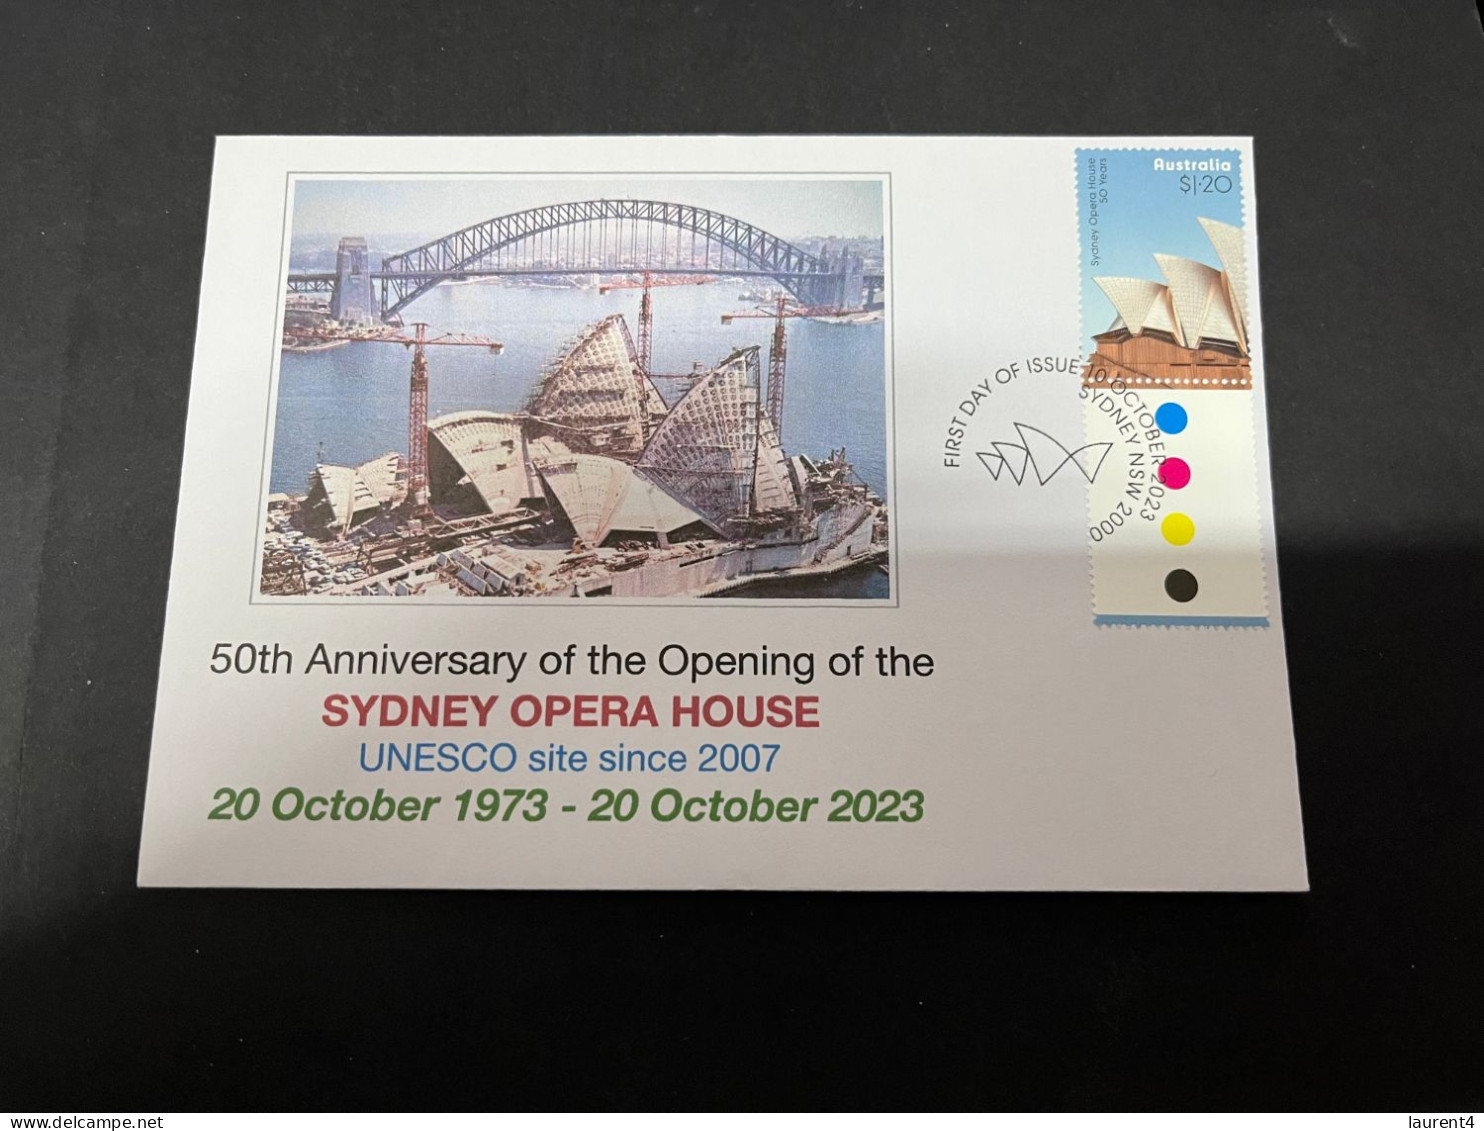 20-10-2023 (4 U 43) Sydney Opera House Celebrate 50th Anniversary (10-10-2023) FDI Cover (under Construction + Bridge) - Storia Postale